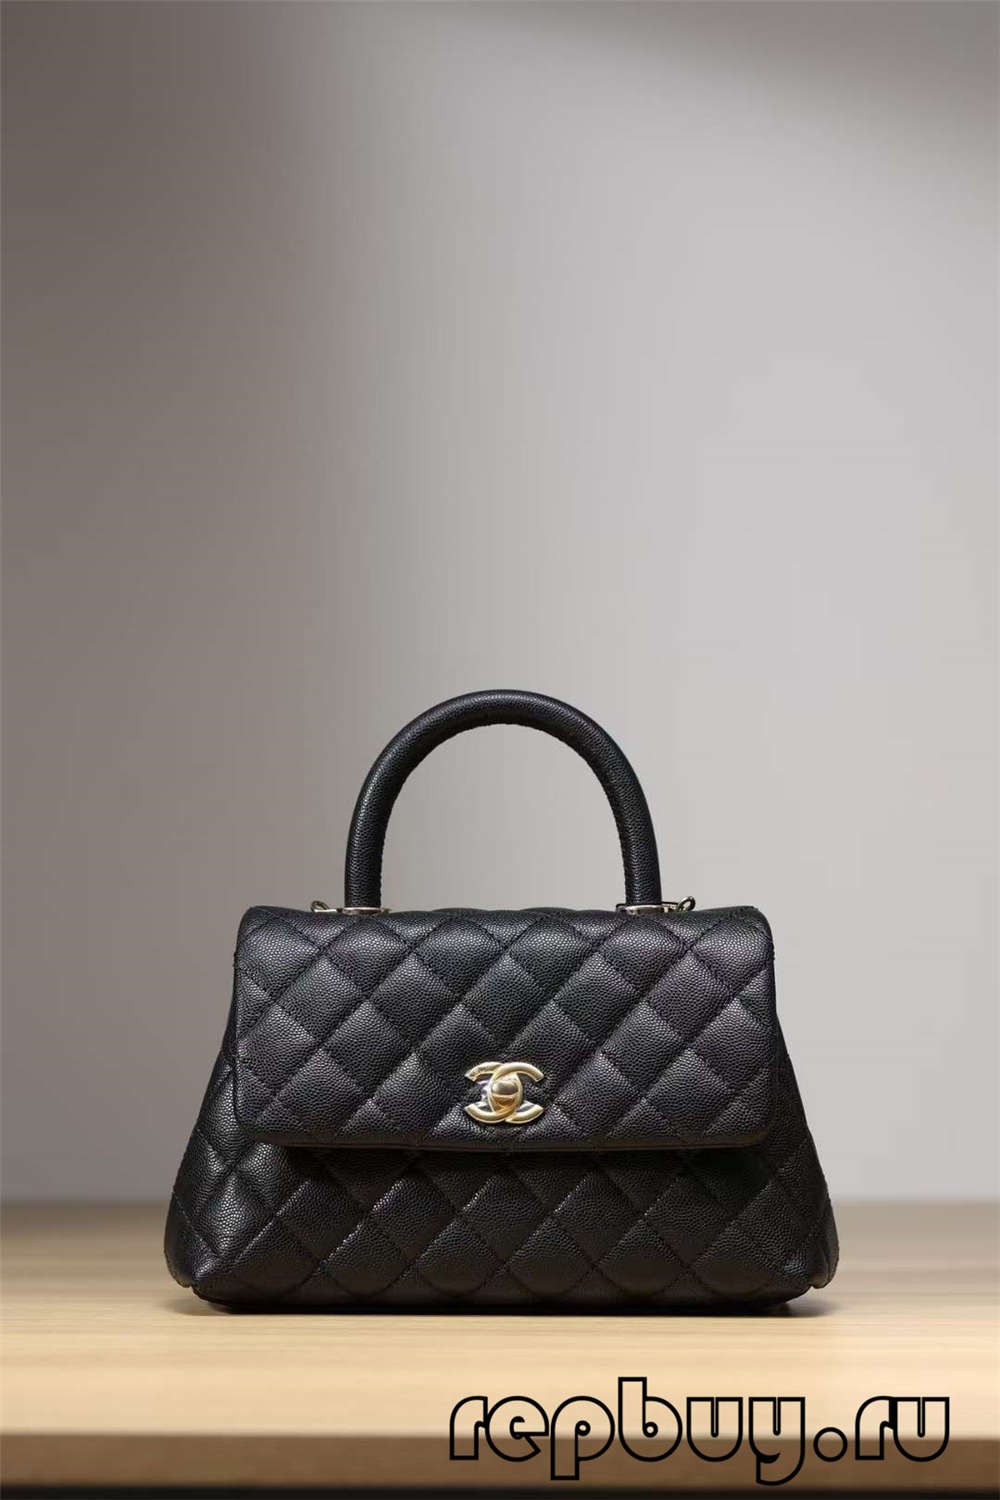 Chanel Coco Palpate Top Replica Handbag Nigrum Aurum Fibula Respice (2022 Renovata) -Best Quality Fake Louis Vuitton Bag Online Store, Replica designer bag ru